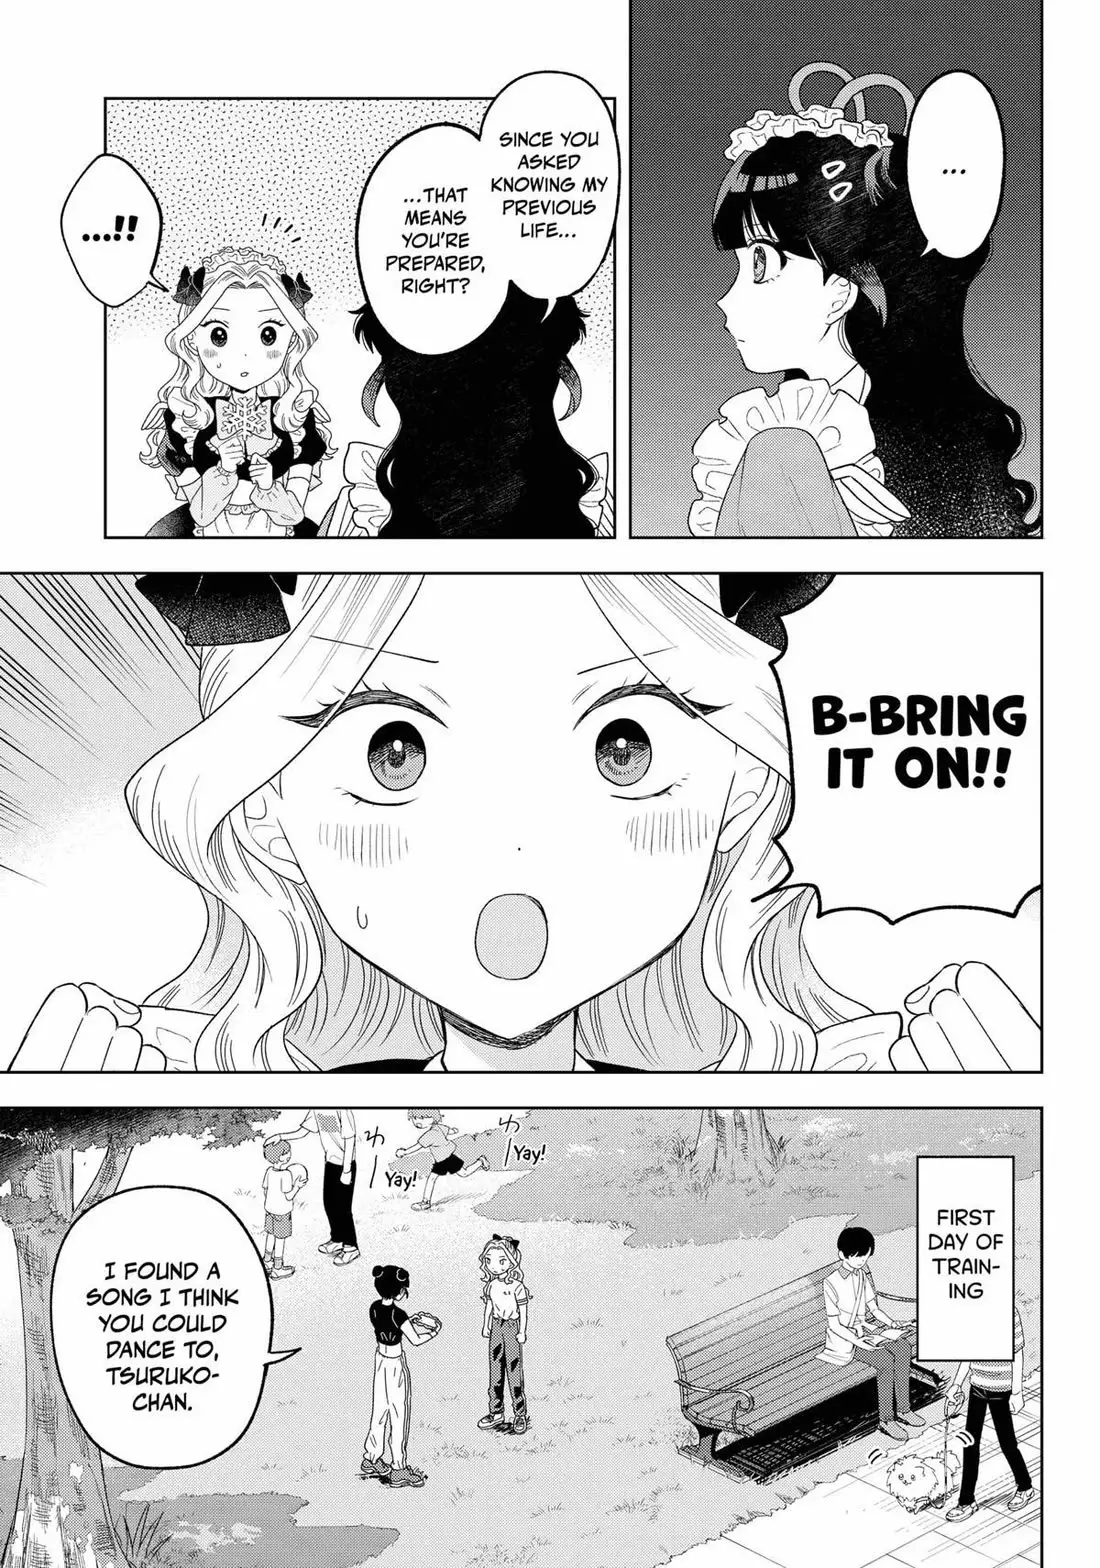 Tsuruko Returns The Favor - 18 page 7-4f6fbe79